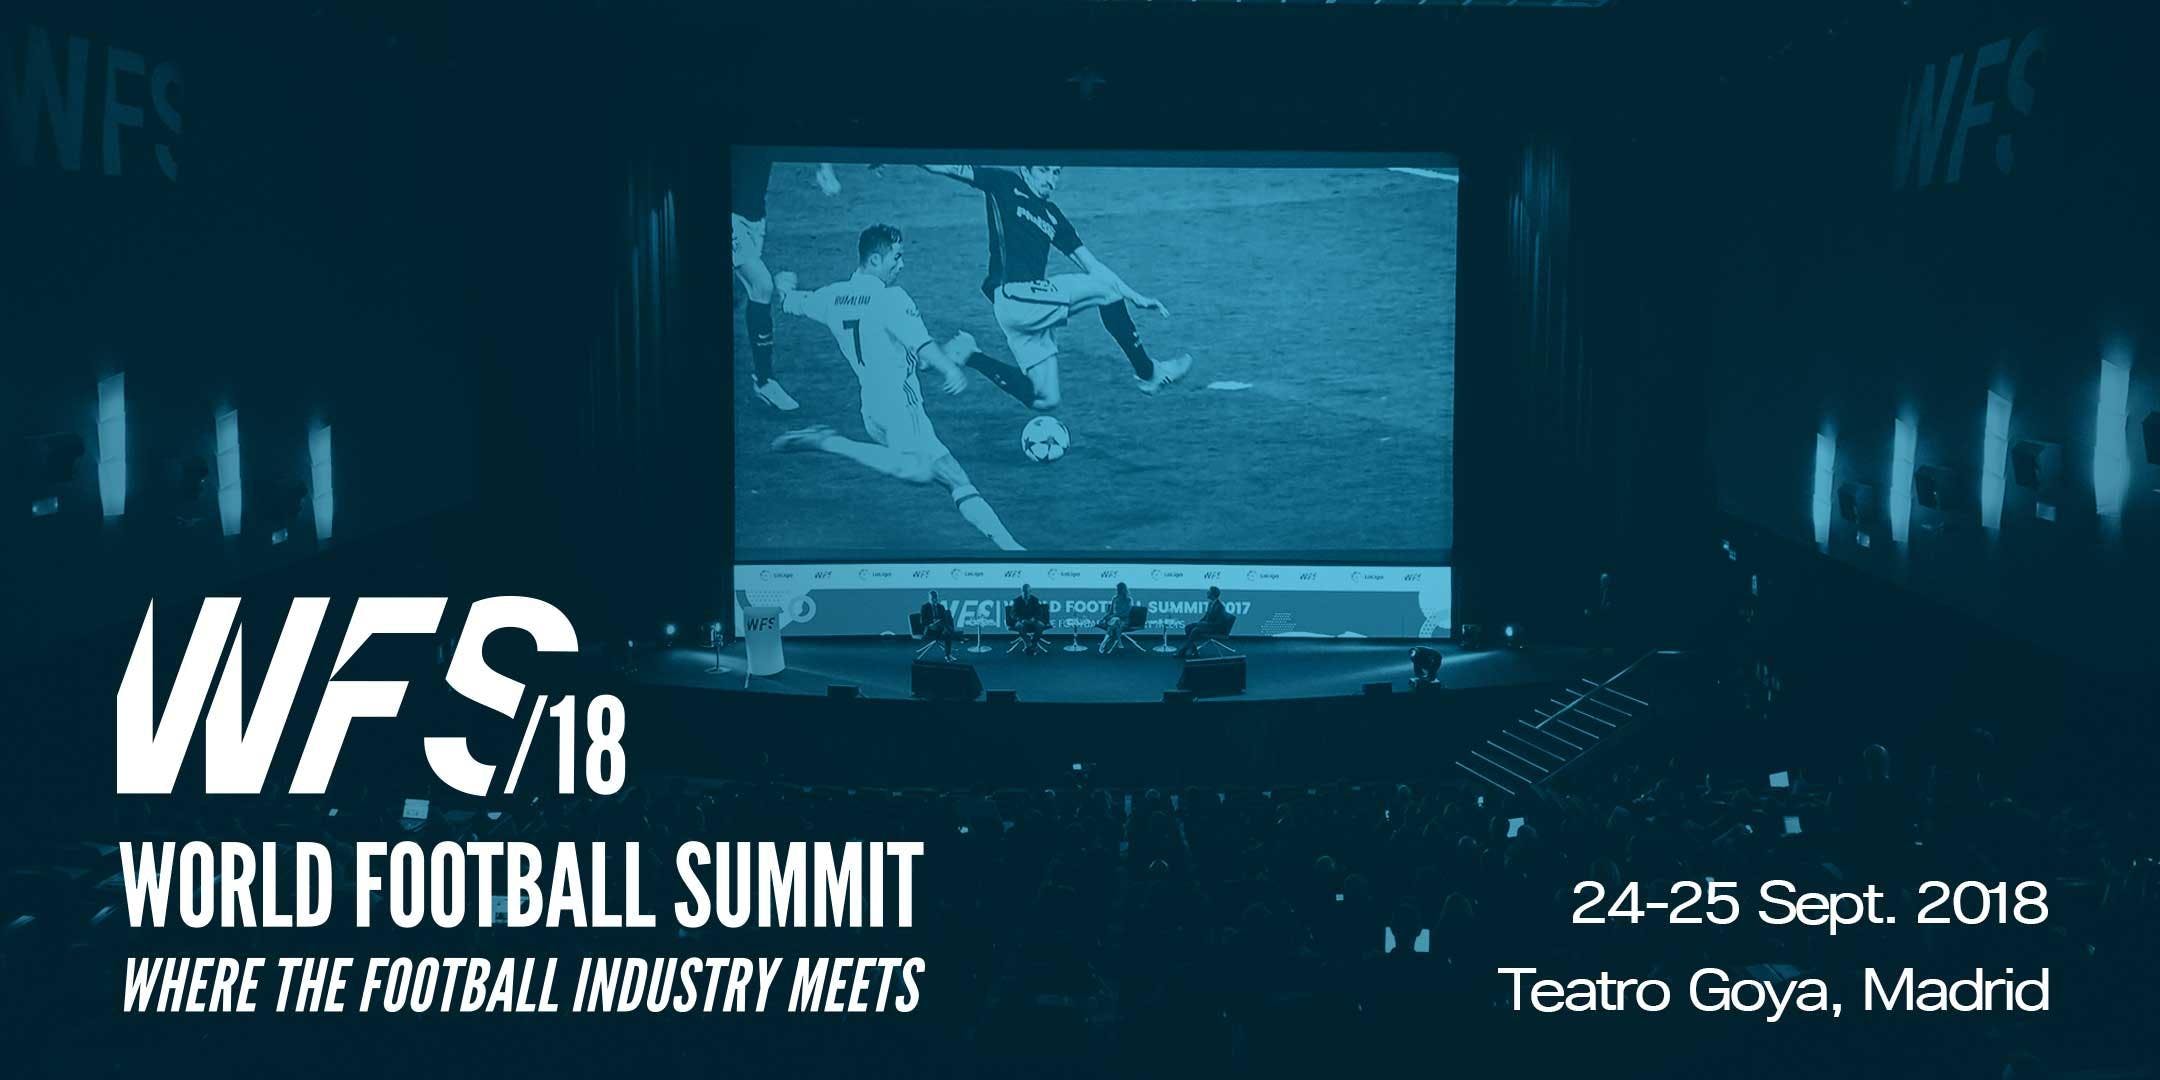 édition 2018 du World Football Summit de Madrid